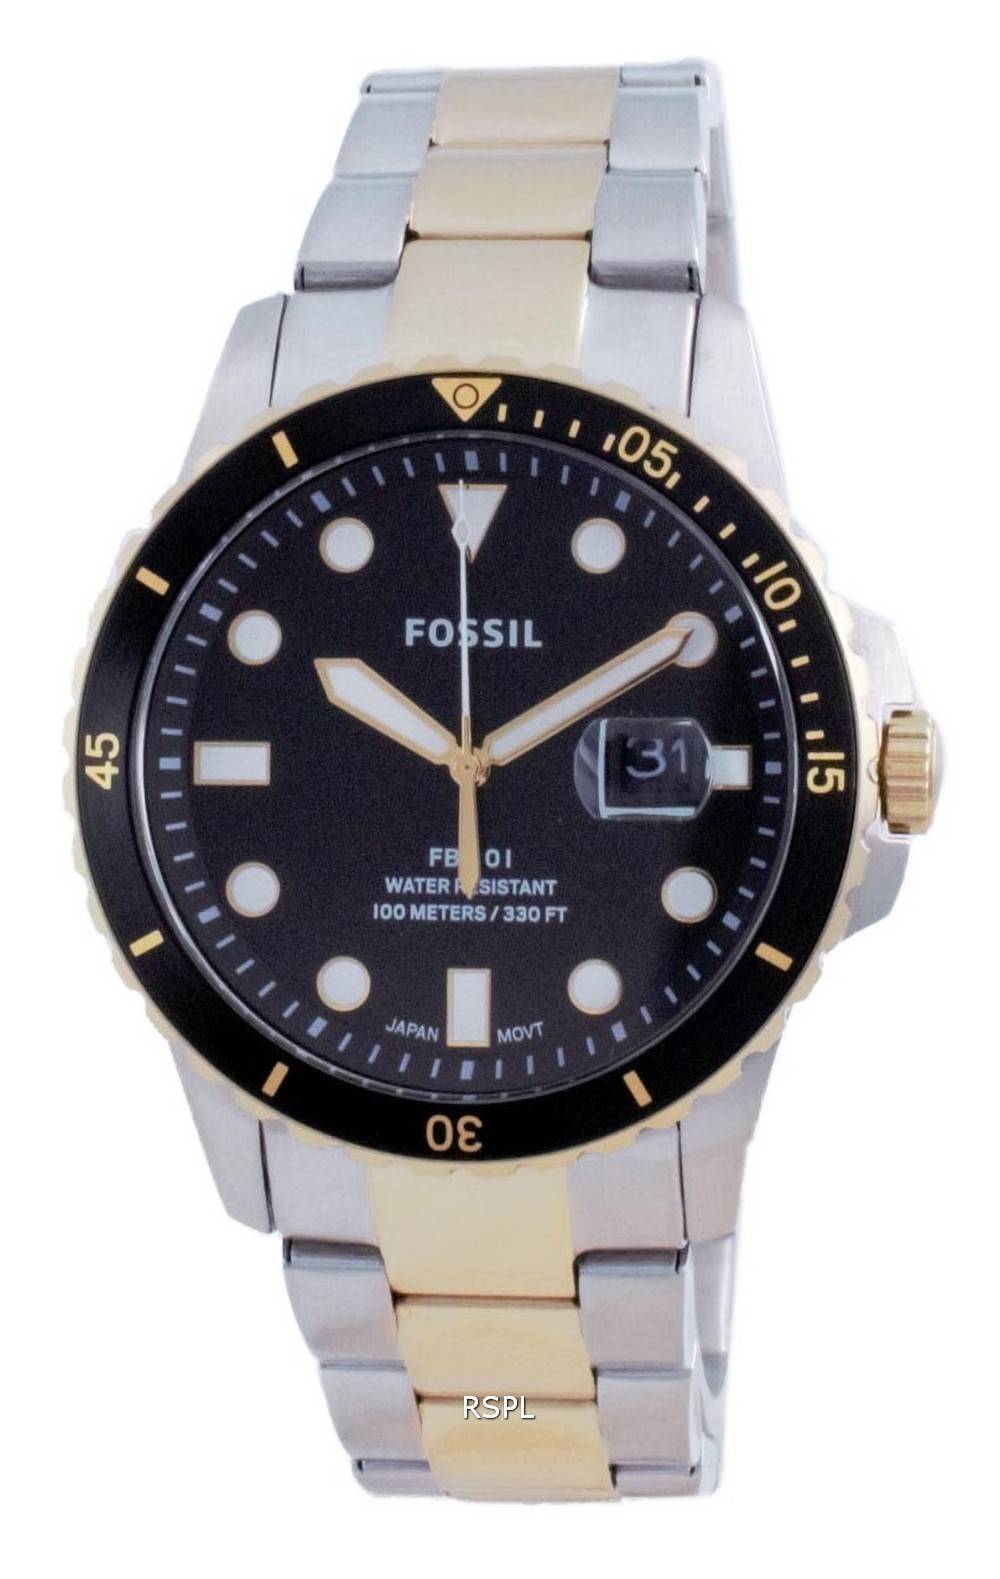 Fossil FB-01 검은 색 다이얼 스테인레스 스틸 쿼츠 FS5653100M 남성용 시계